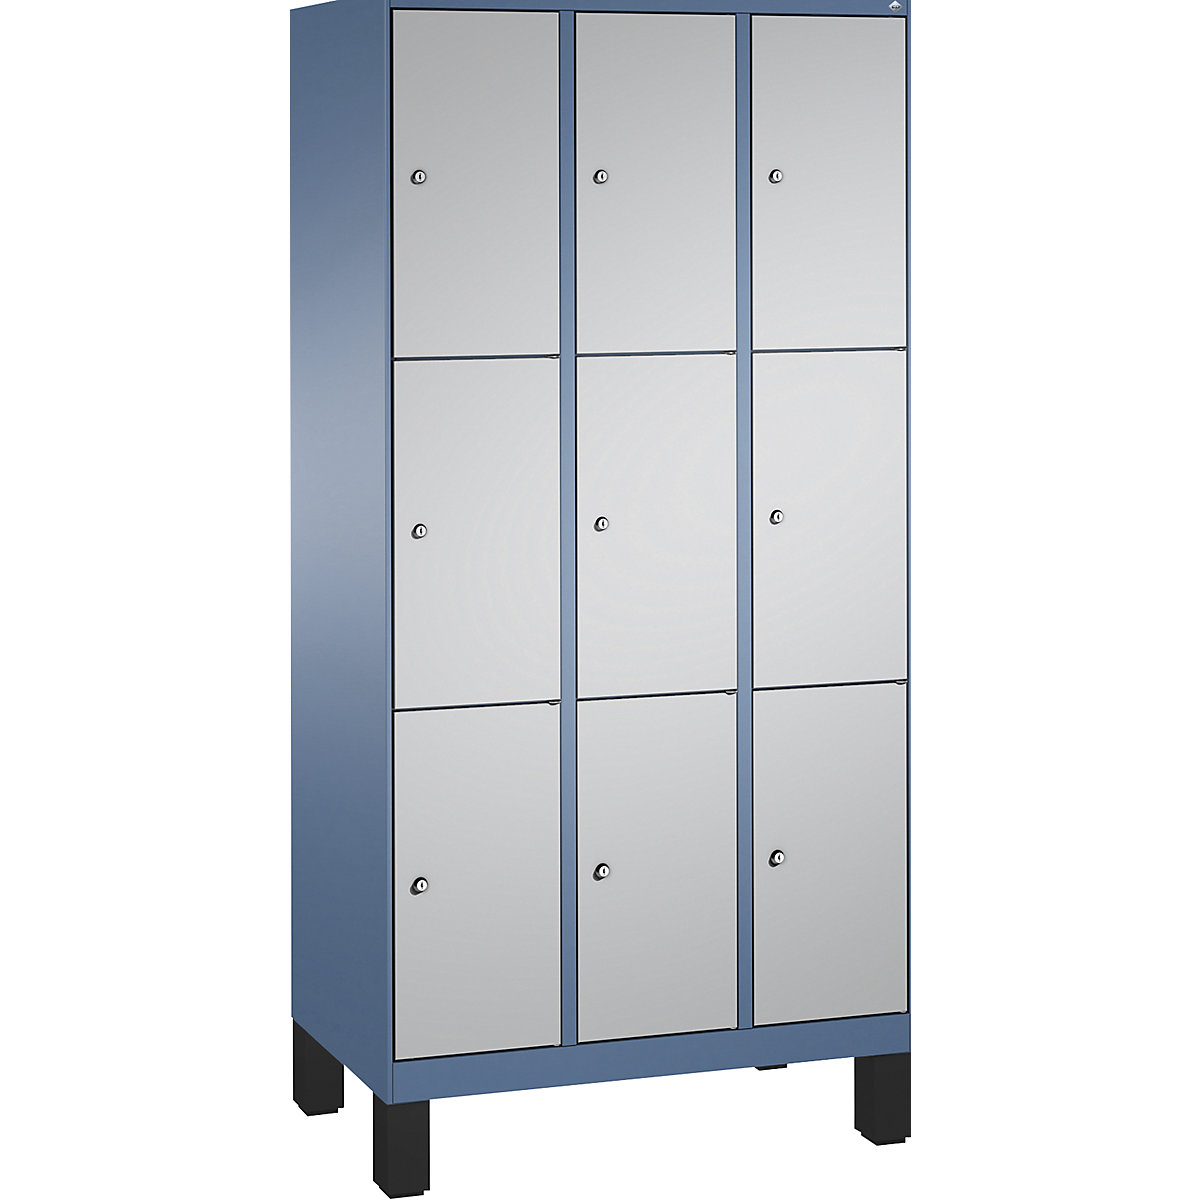 Armário de cacifos EVOLO, com pés – C+P, 3 compartimentos, 3 cacifos cada, largura do compartimento 300 mm, azul distante / cinza alumínio-3